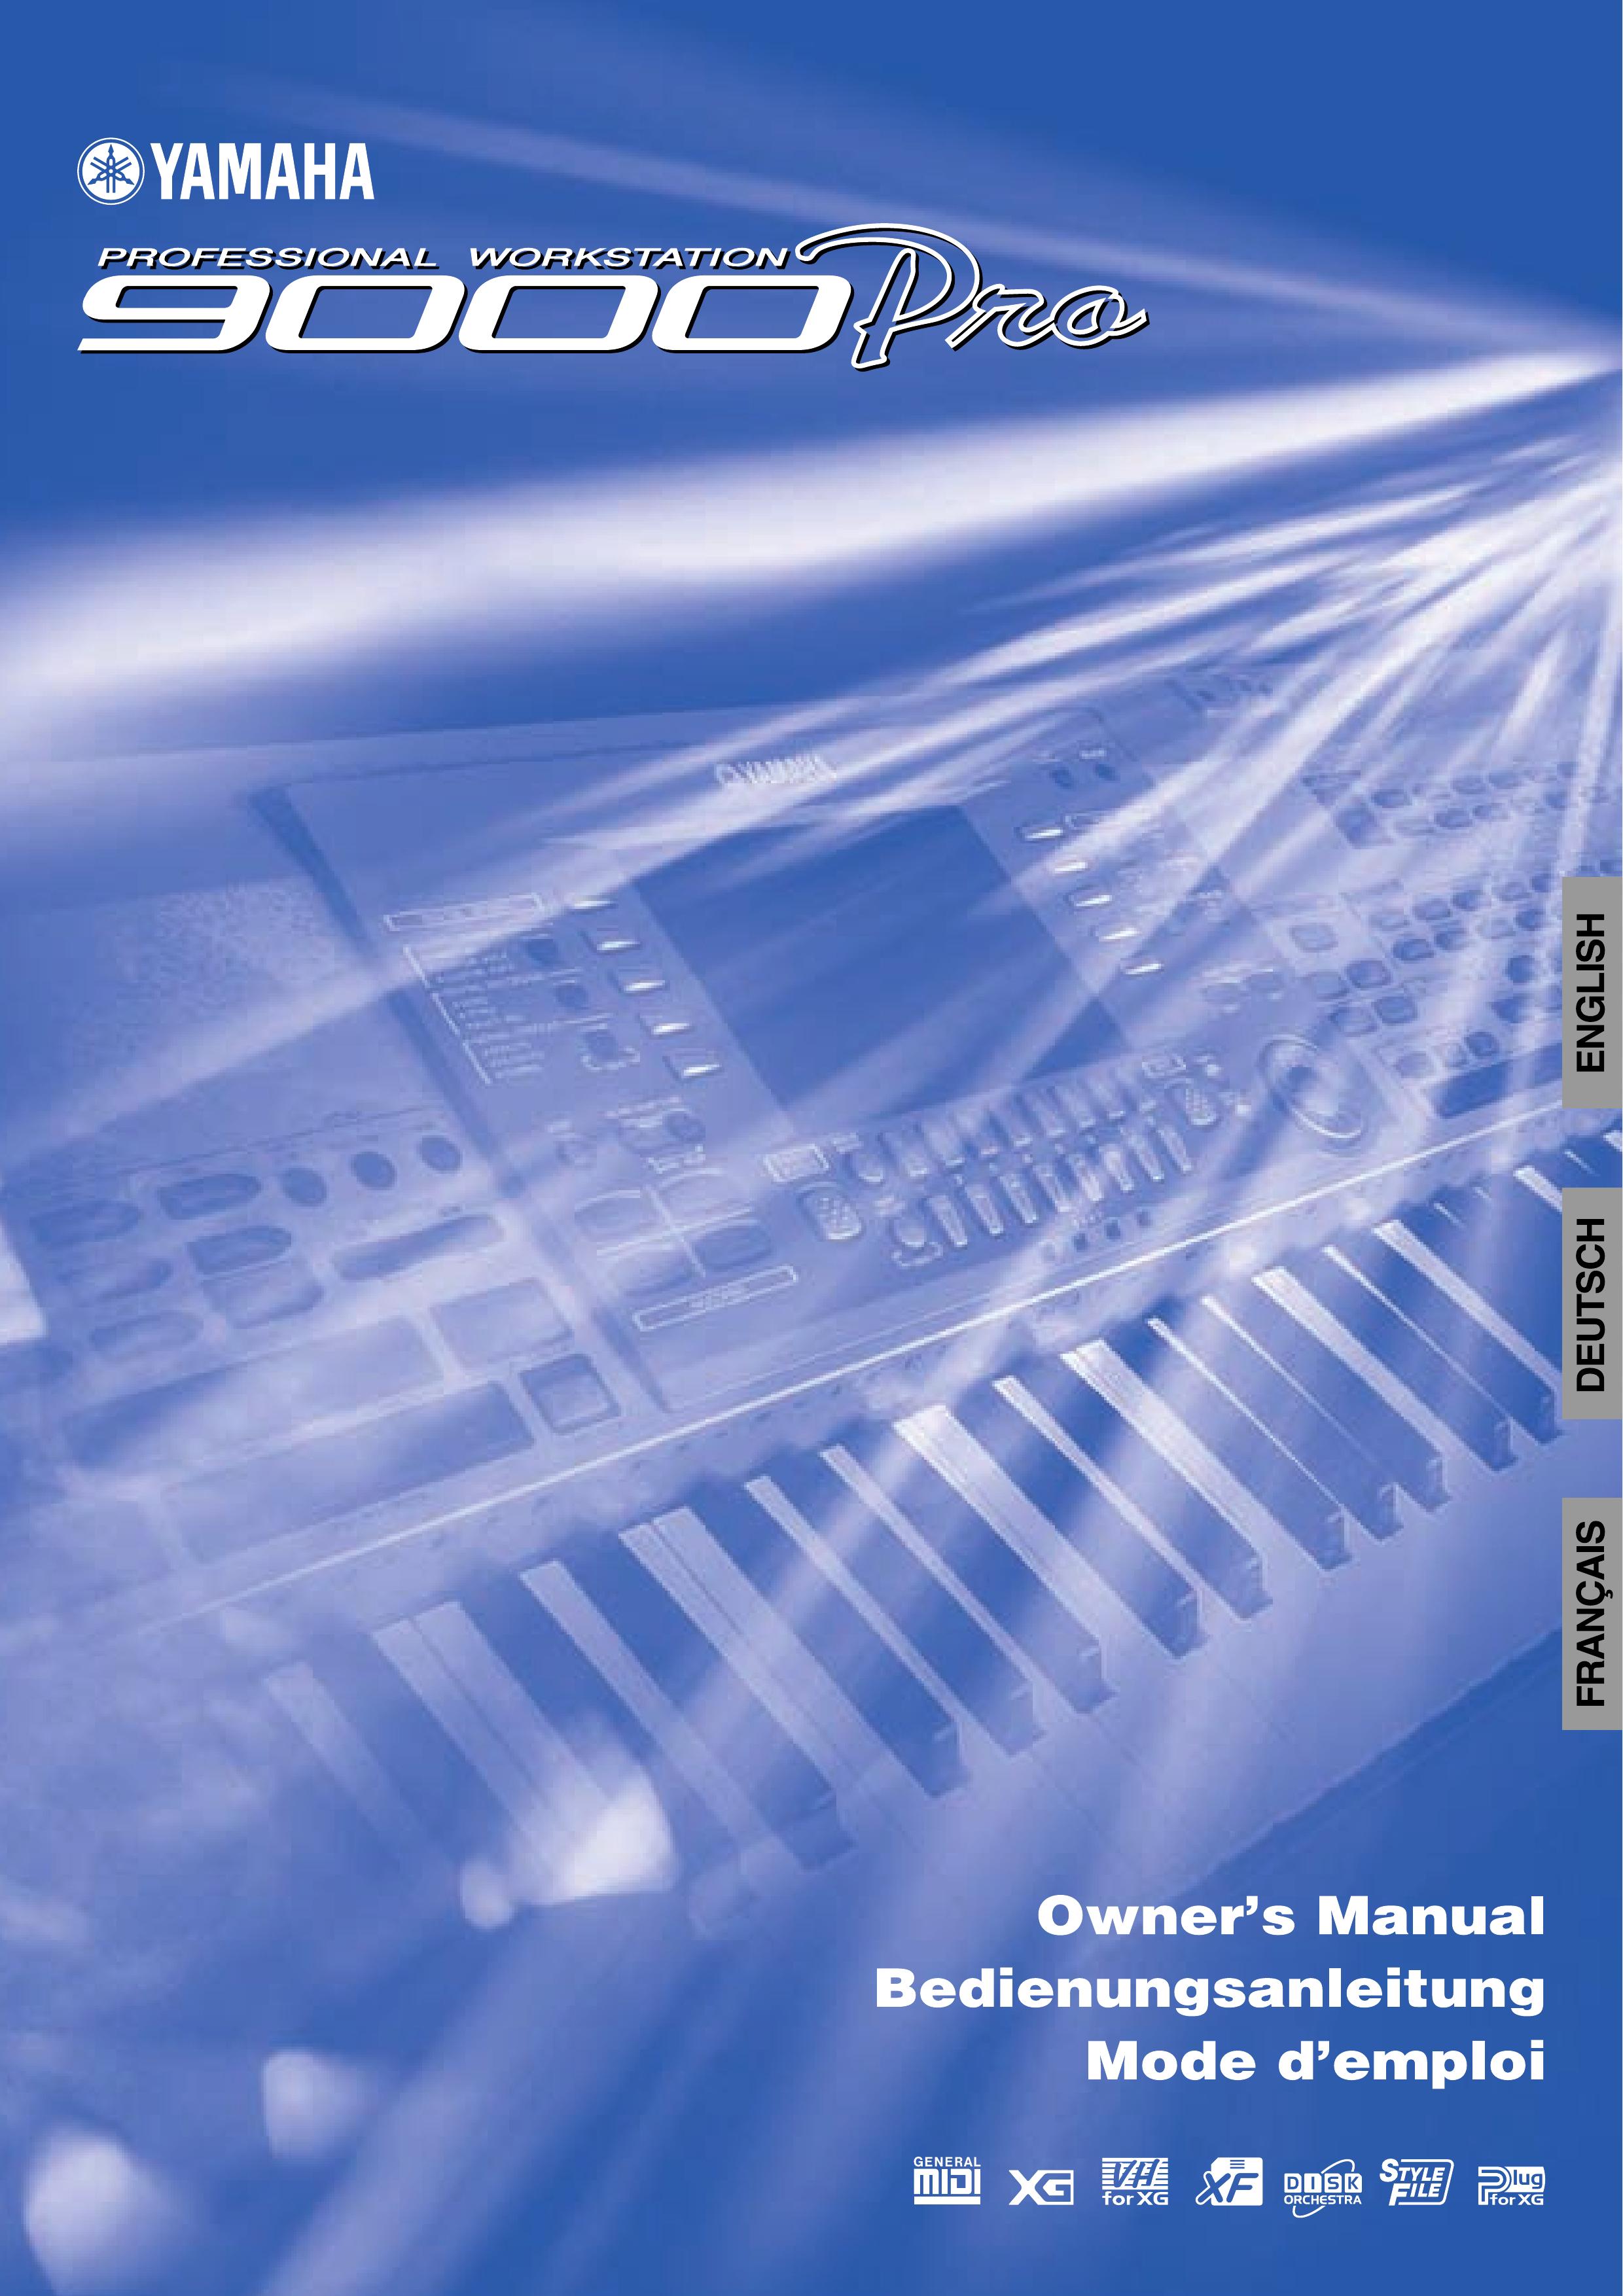 Yamaha 9000 Pro Electronic Keyboard User Manual